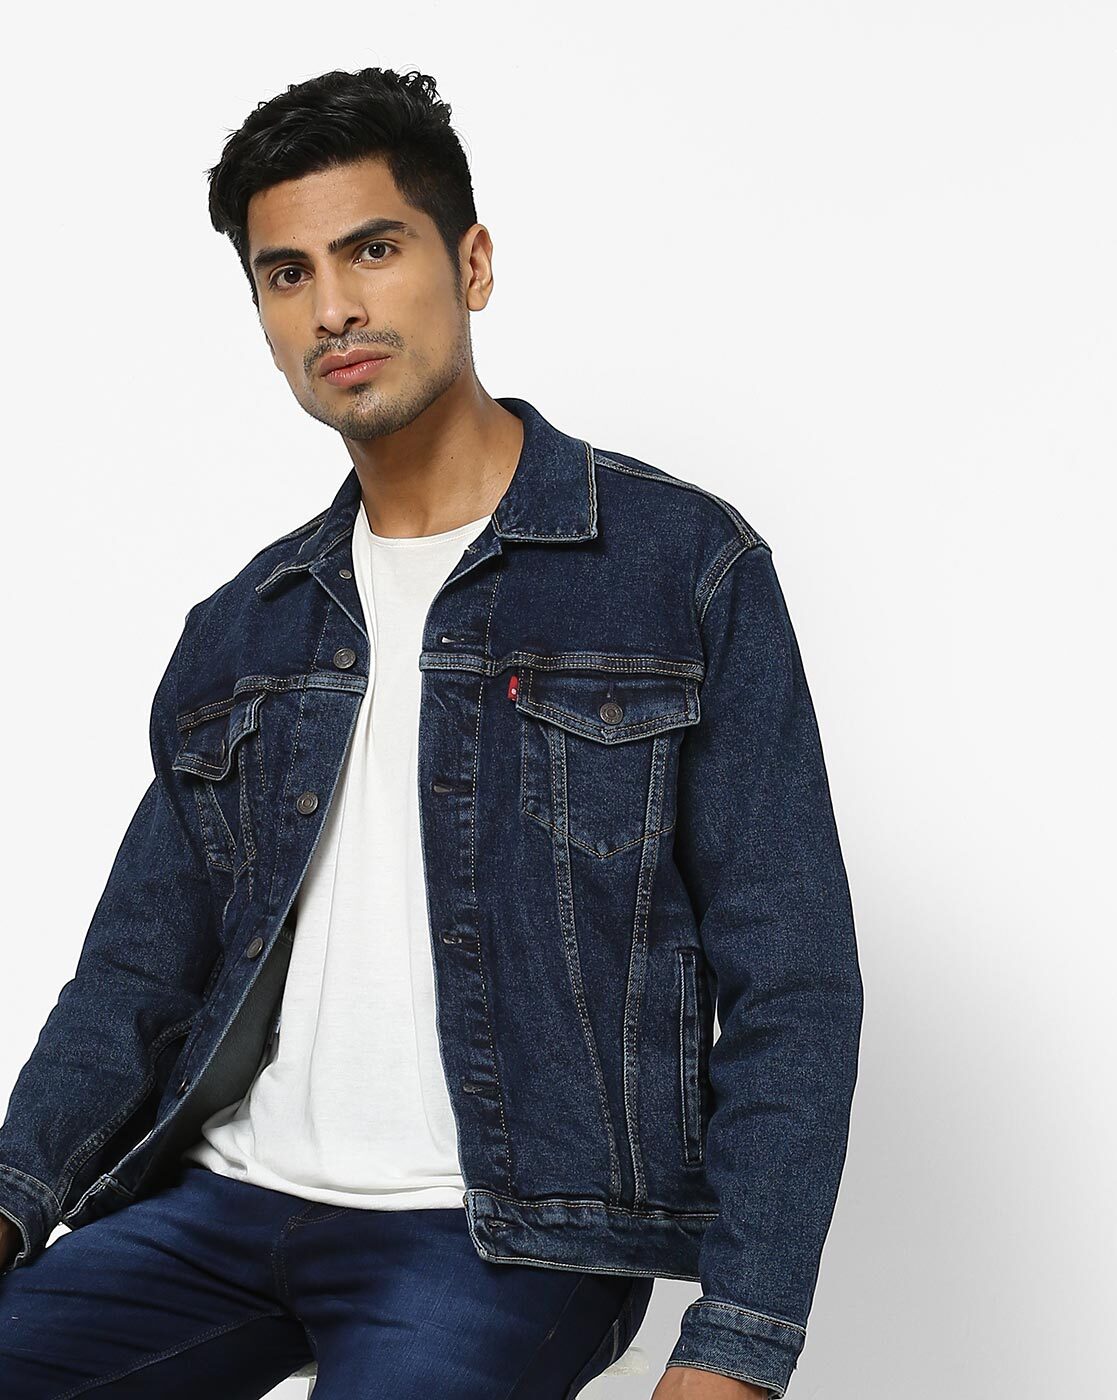 levis jeans jacket india